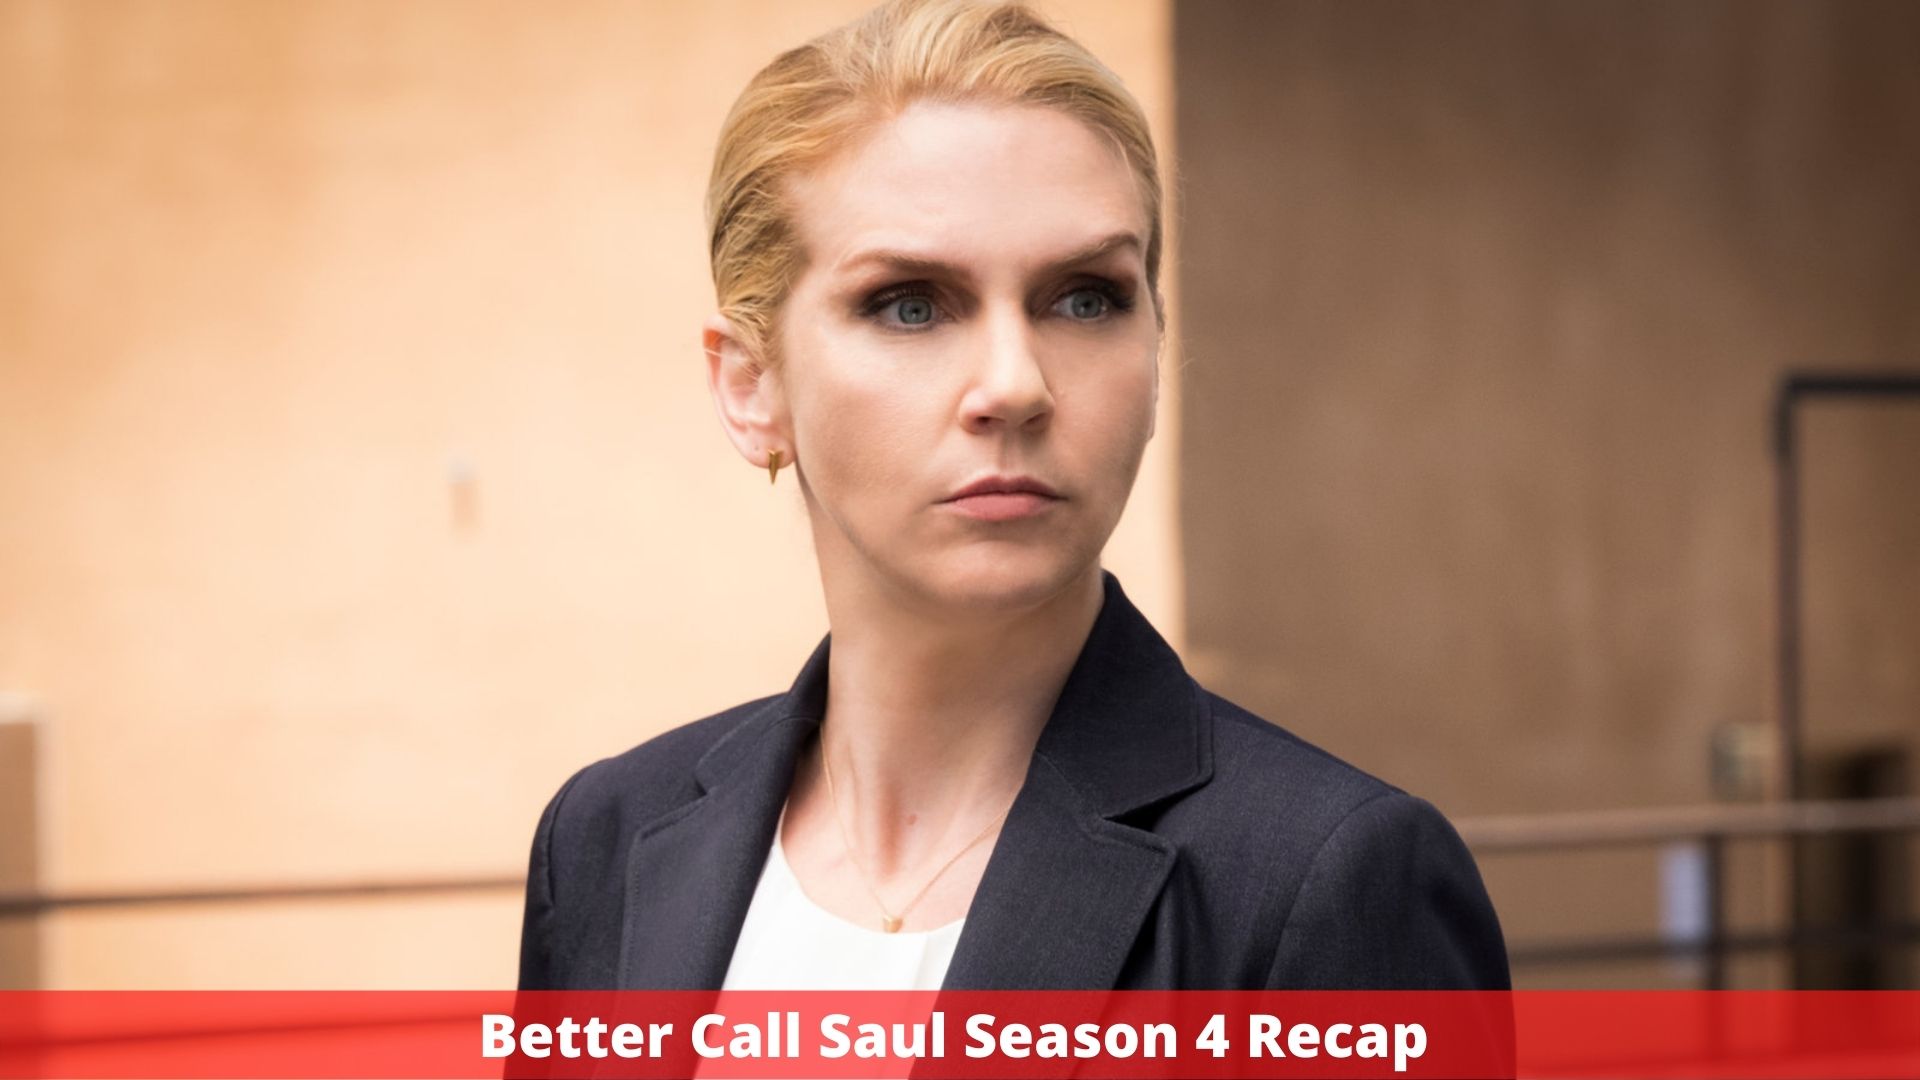 Better Call Saul Season 4 Recap - Everything We Know!